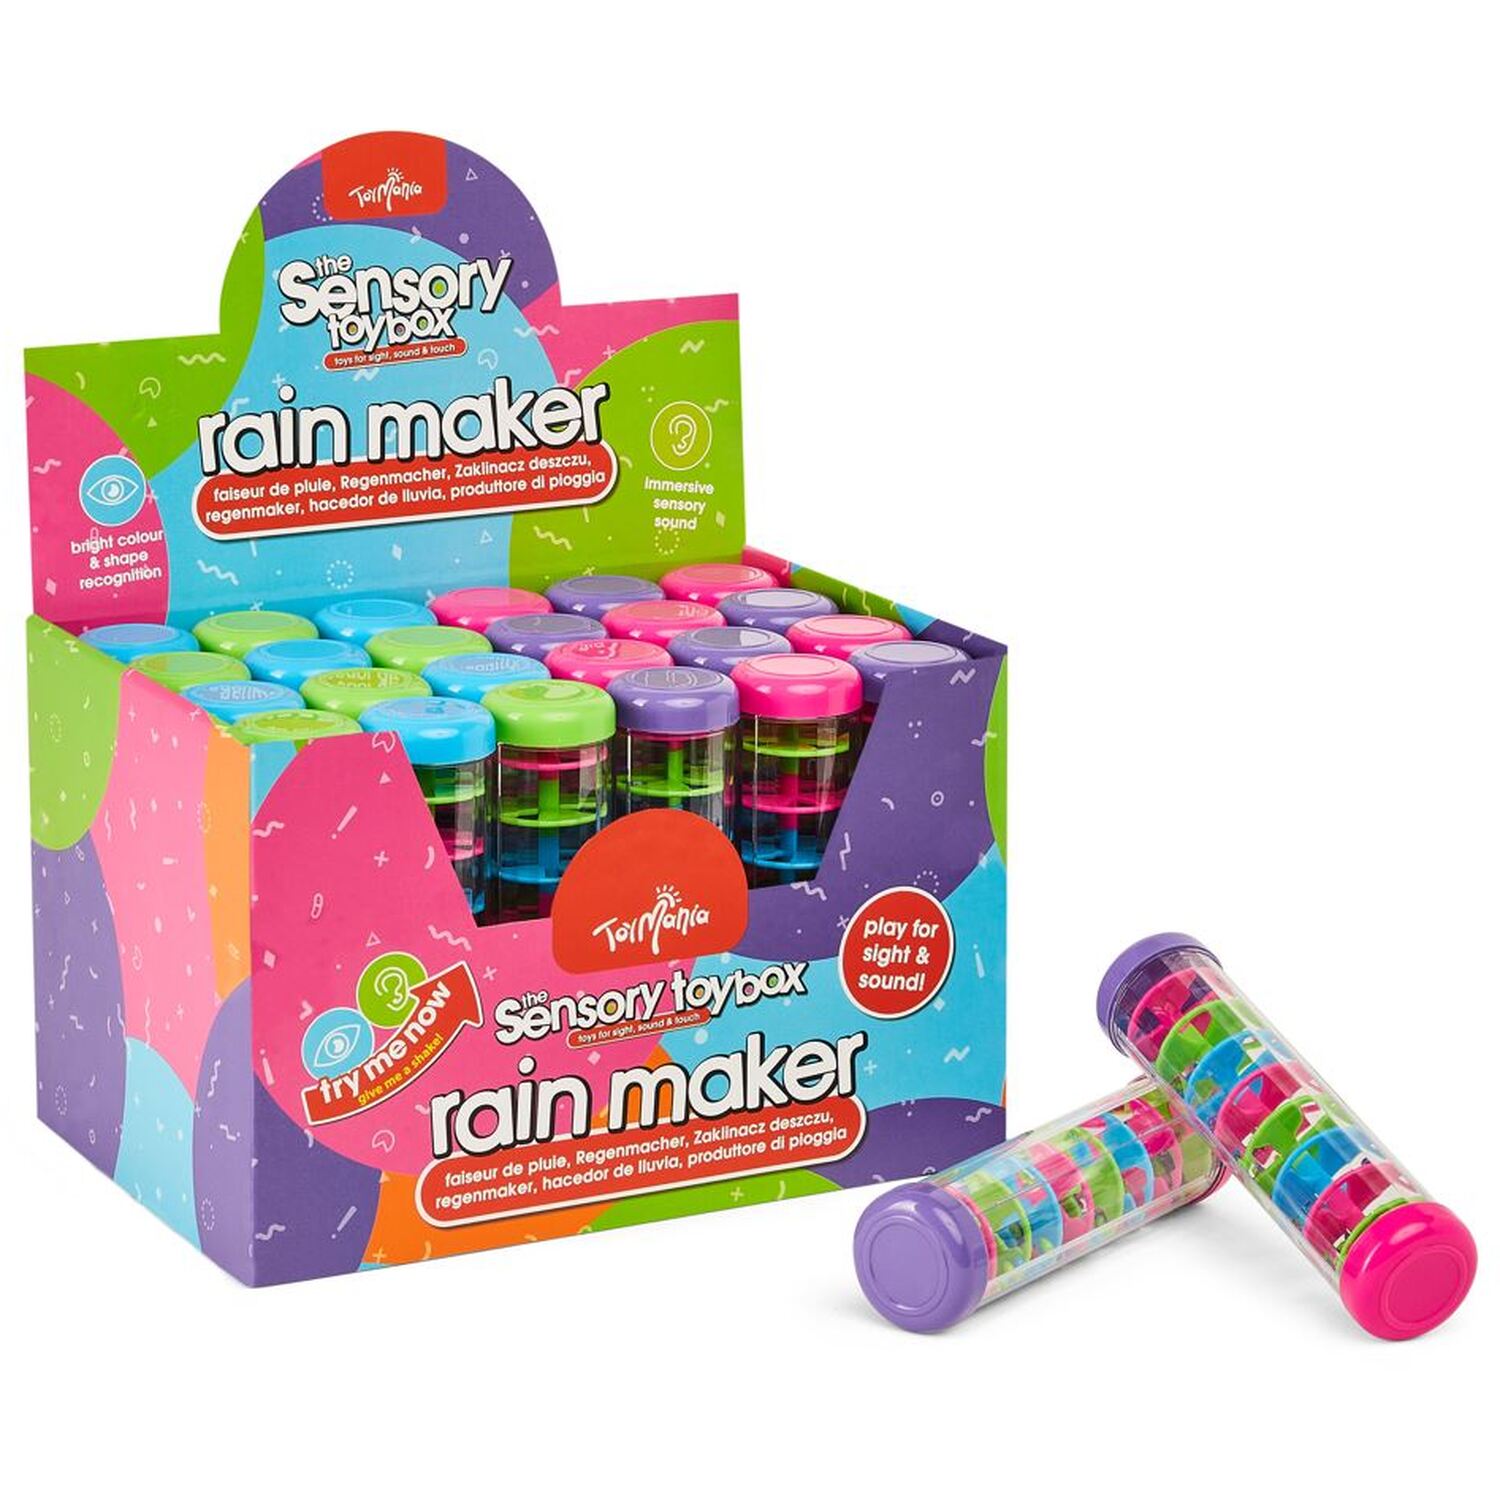 The Sensory Toybox Rainmaker Image